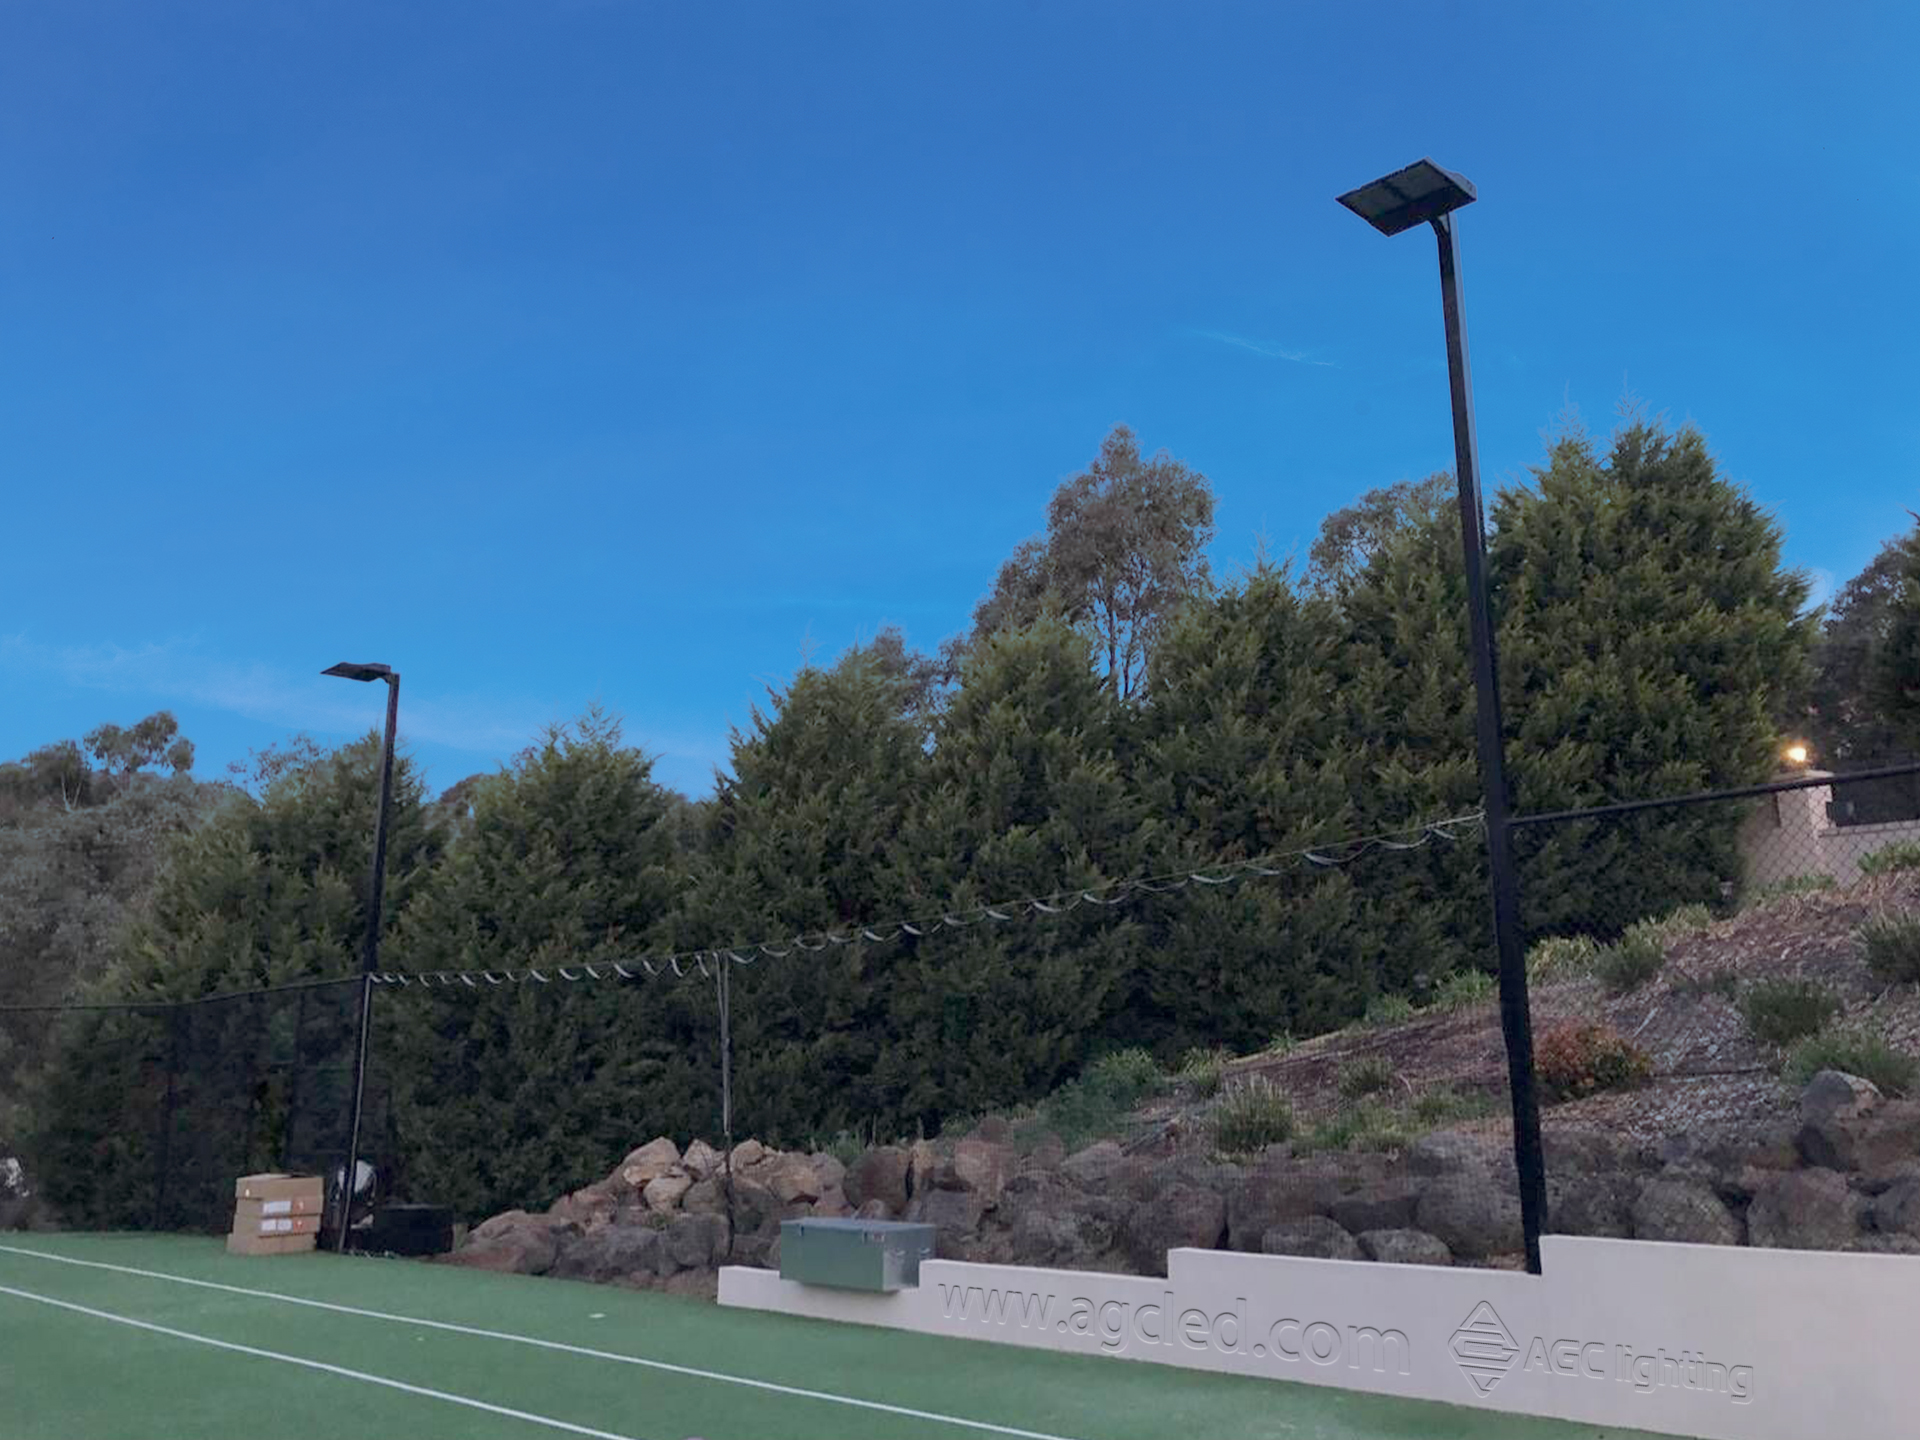 300w&450w led area light for tennis court lighting